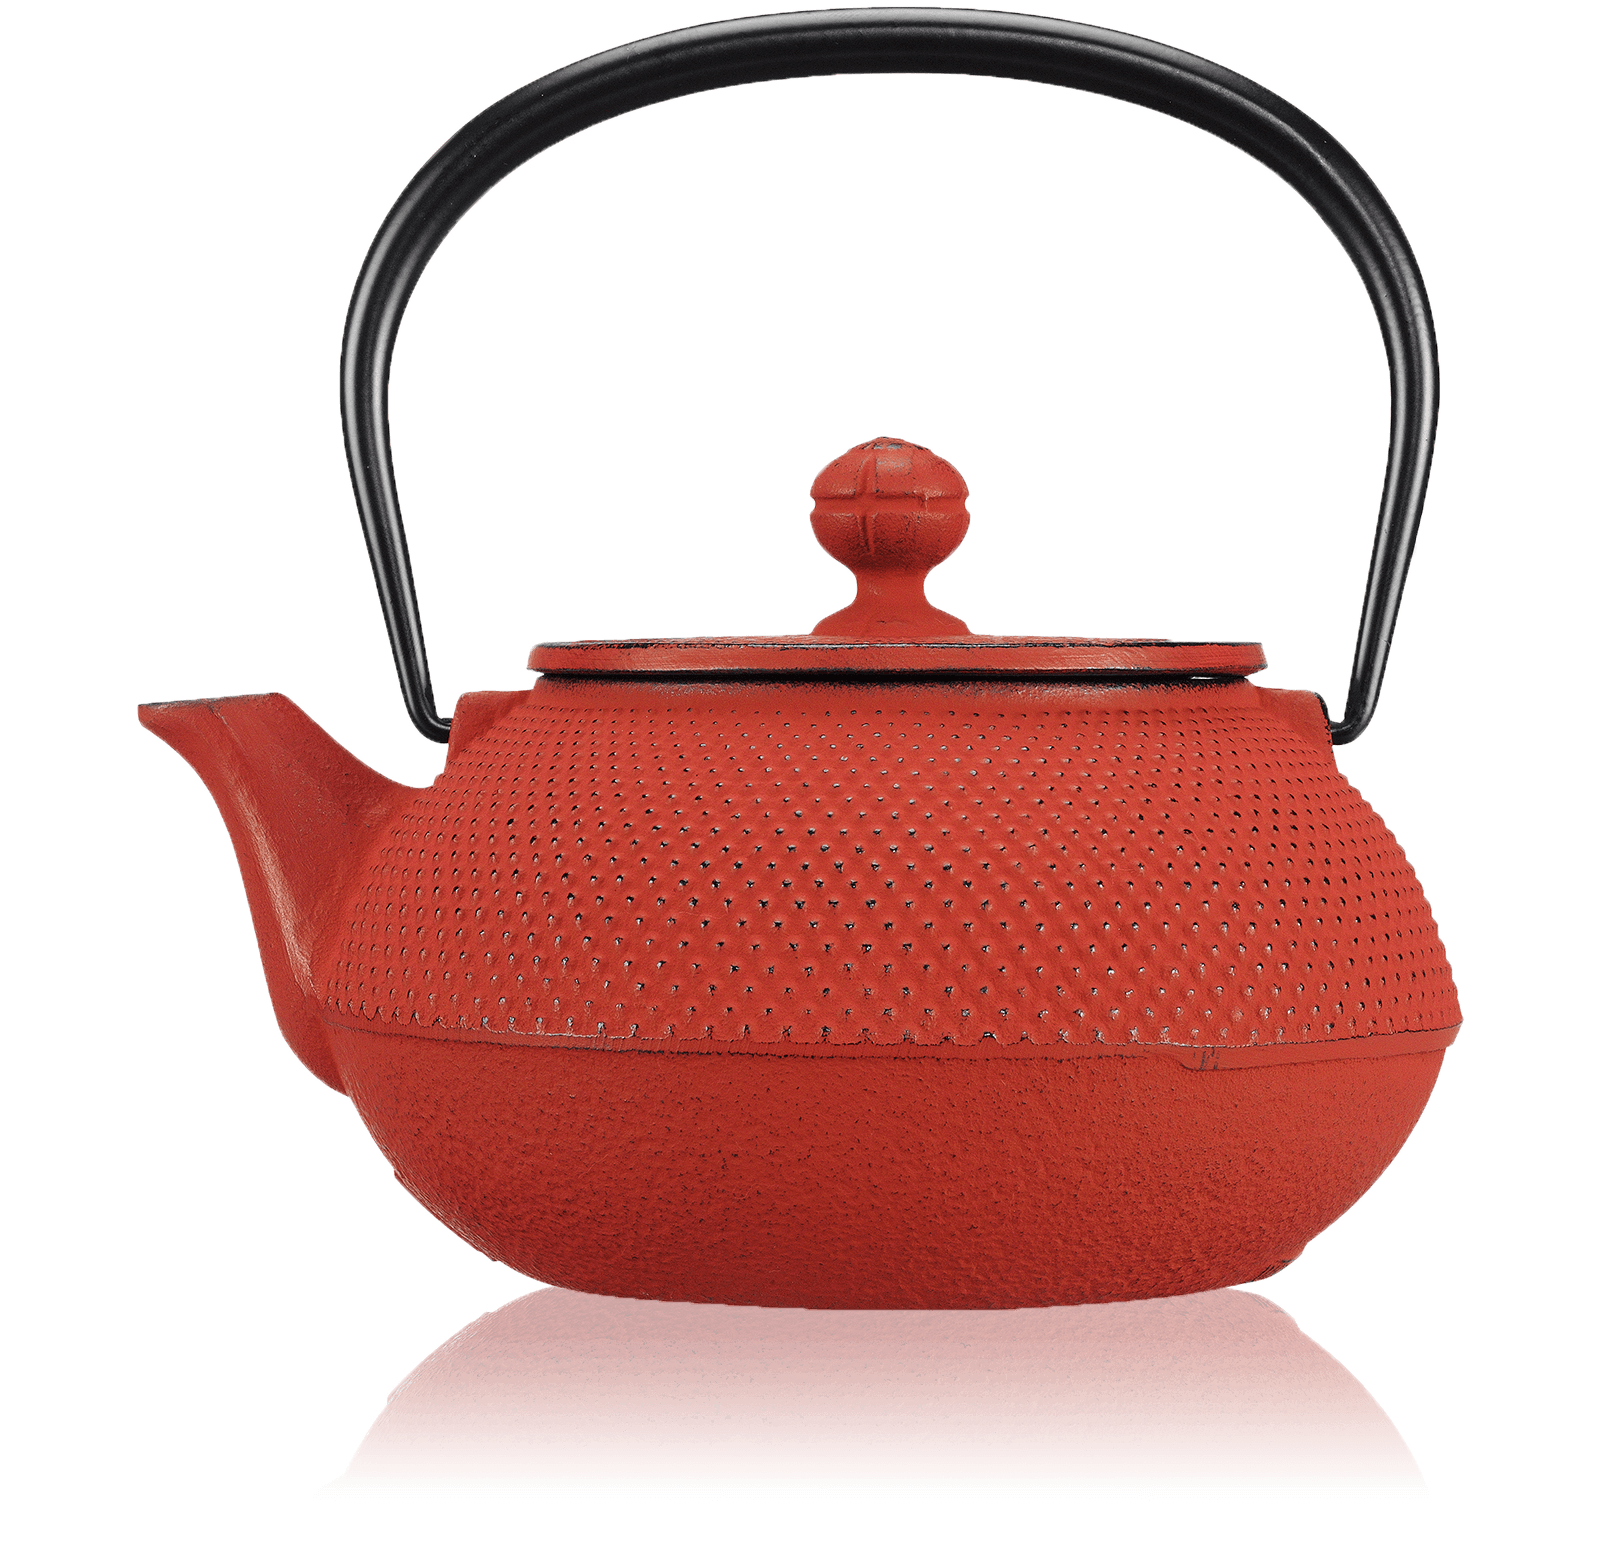 Infuseur Kusmi Tea pour tasse et mug en acier inoxydable